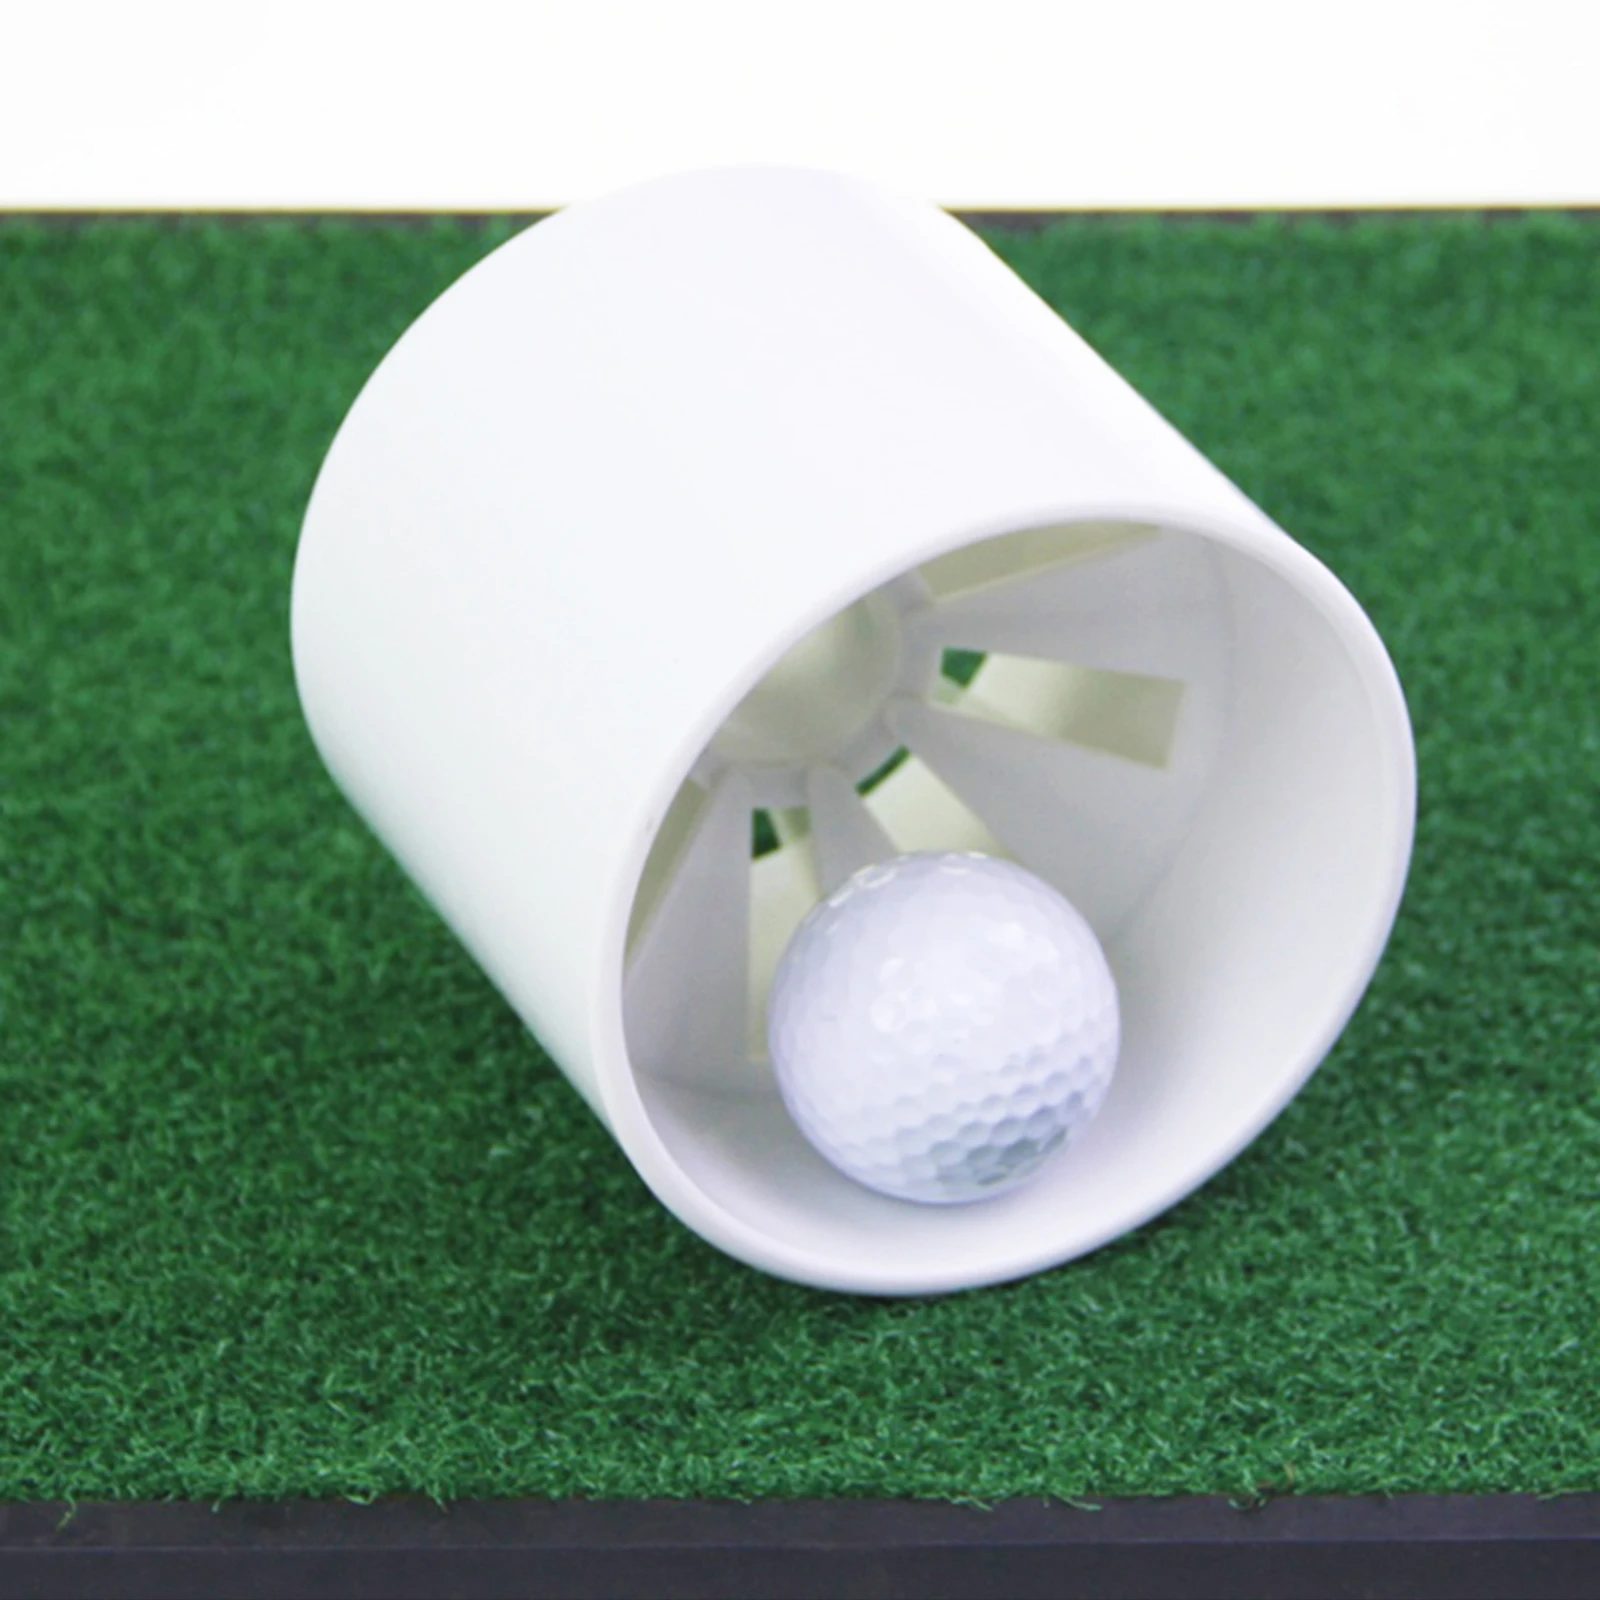 Golf Indoor Outdoor Golf Putting Green Flag Accessories Golf Practice Training Green Golf Hole Cup|Golf Training Aids| - AliExpress